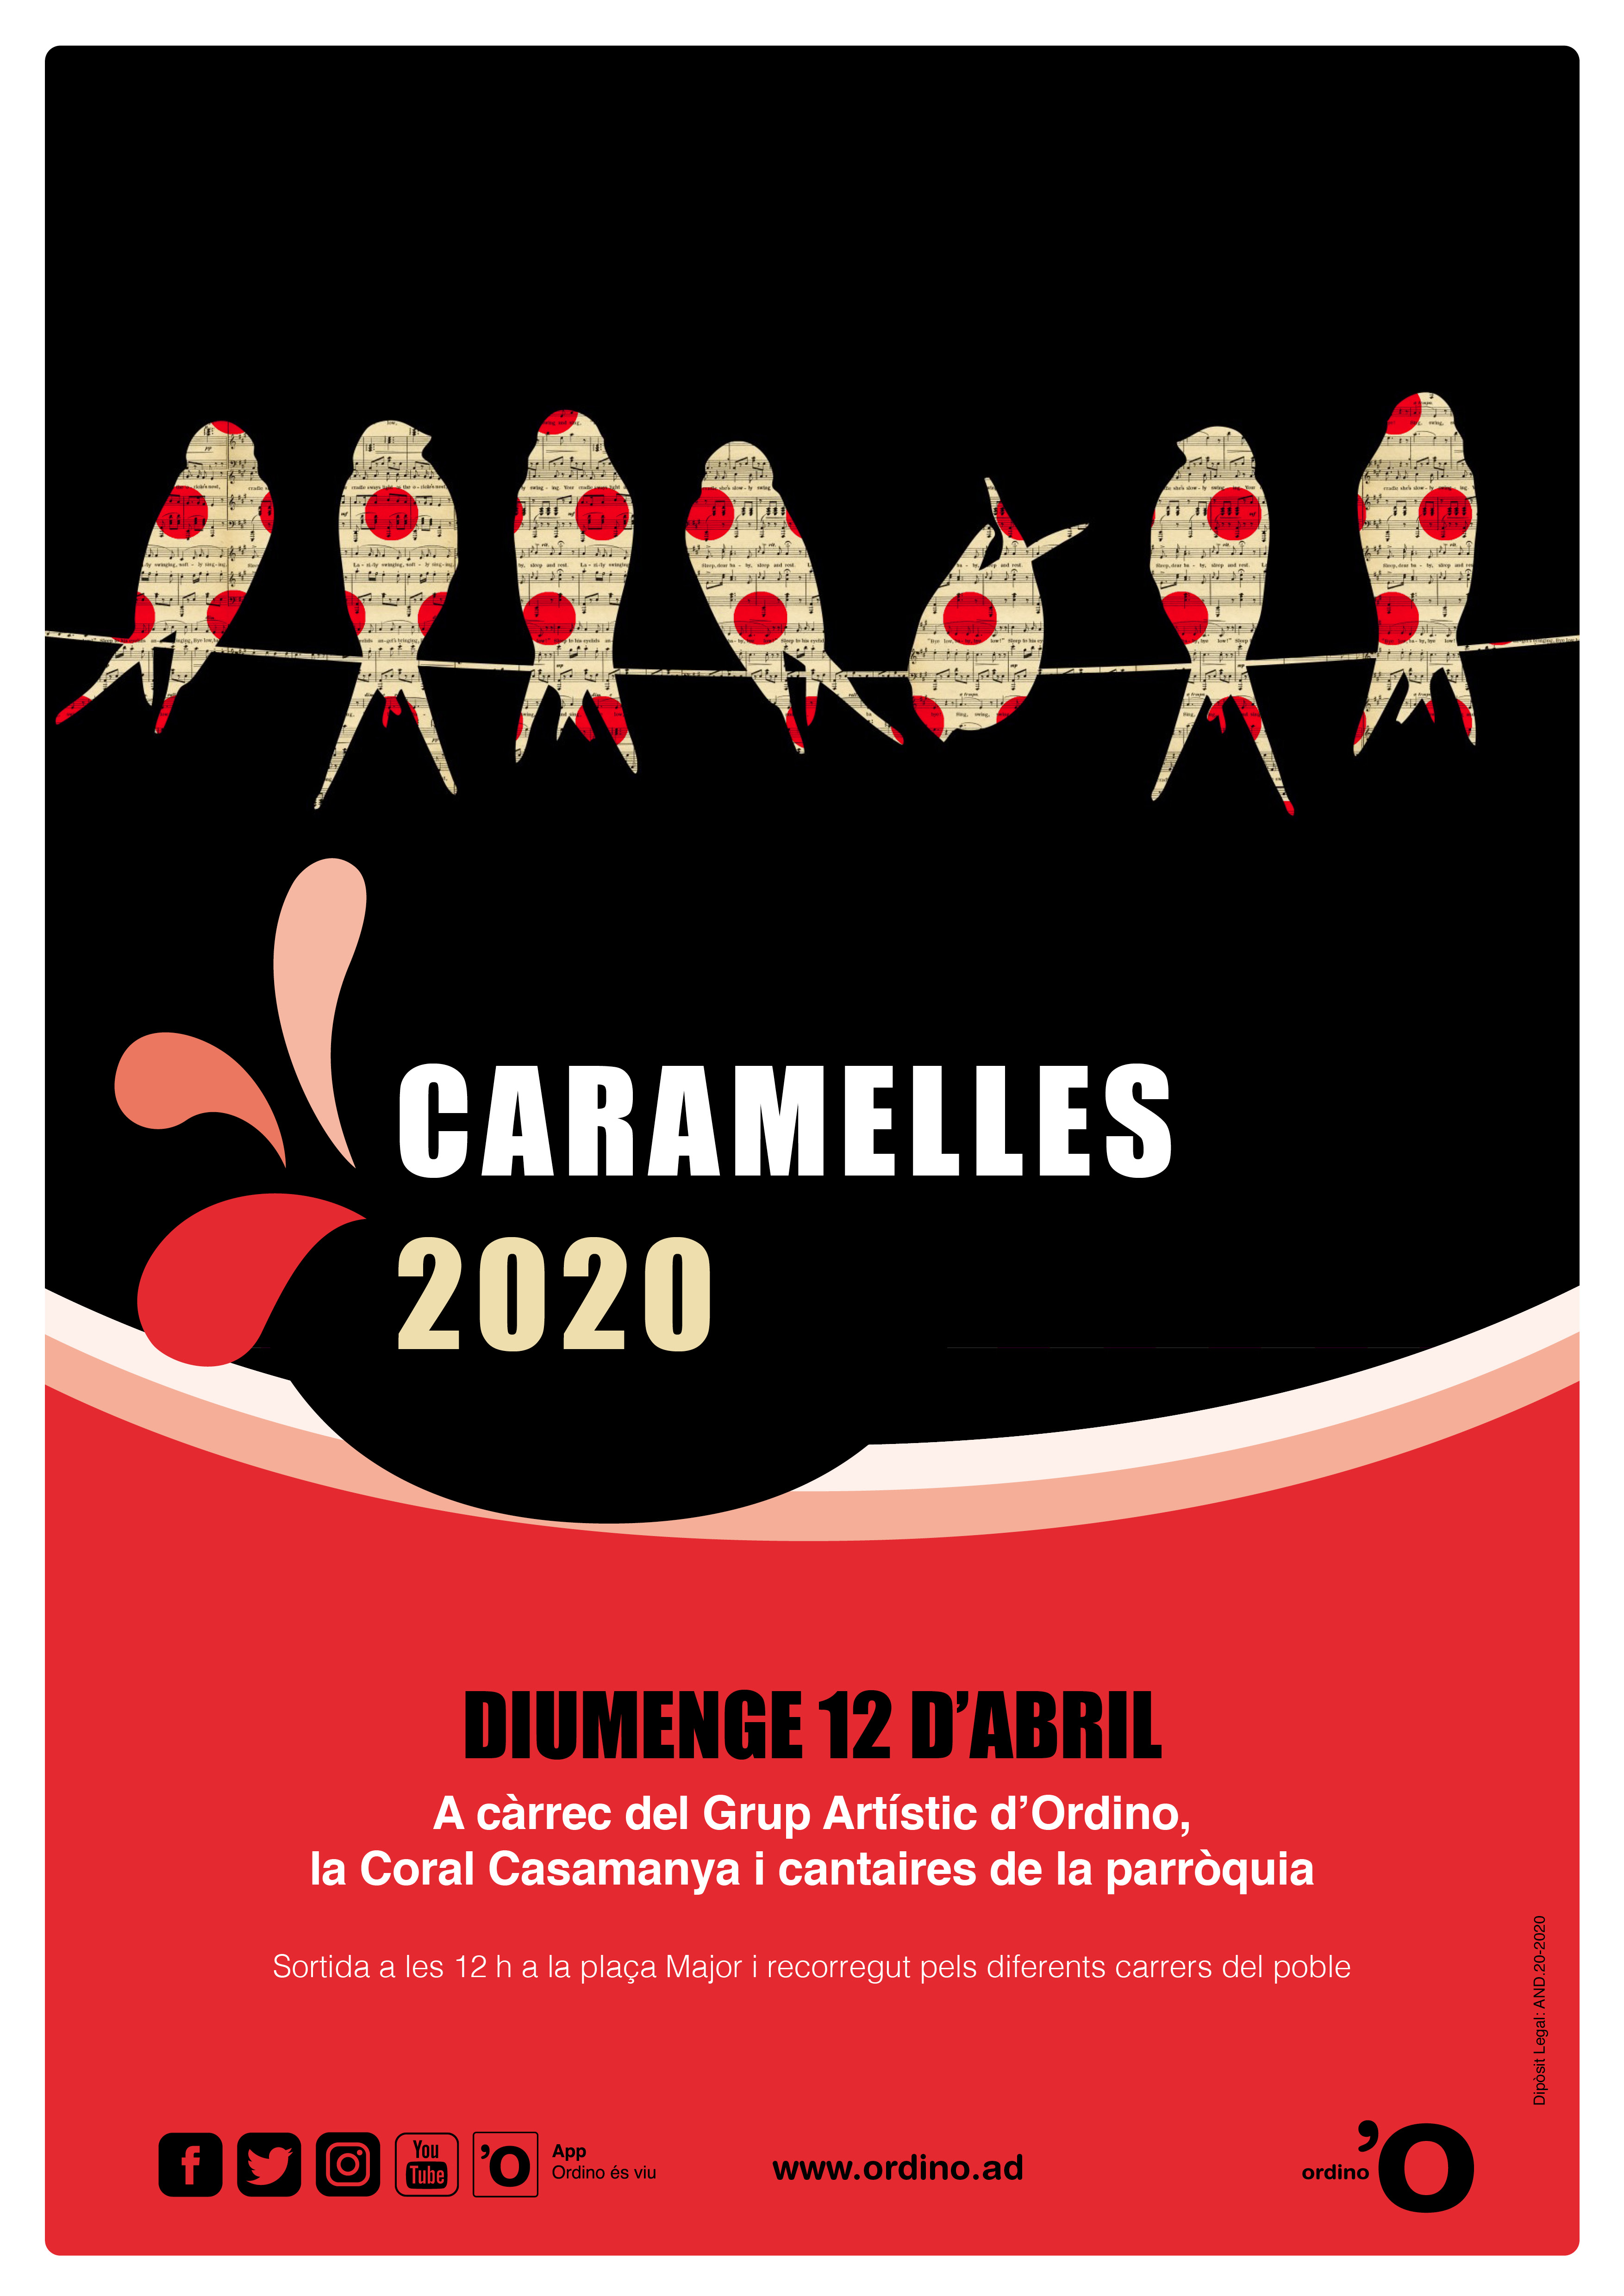 Caramelles 2020